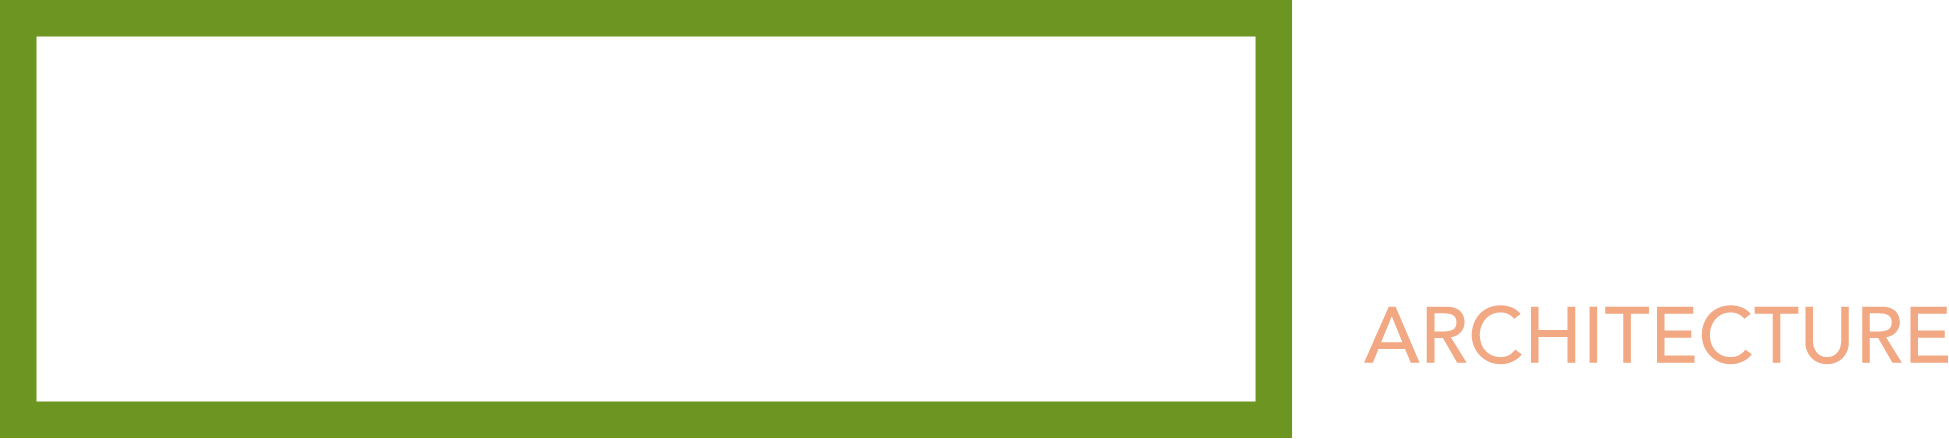 Greenspace Studio